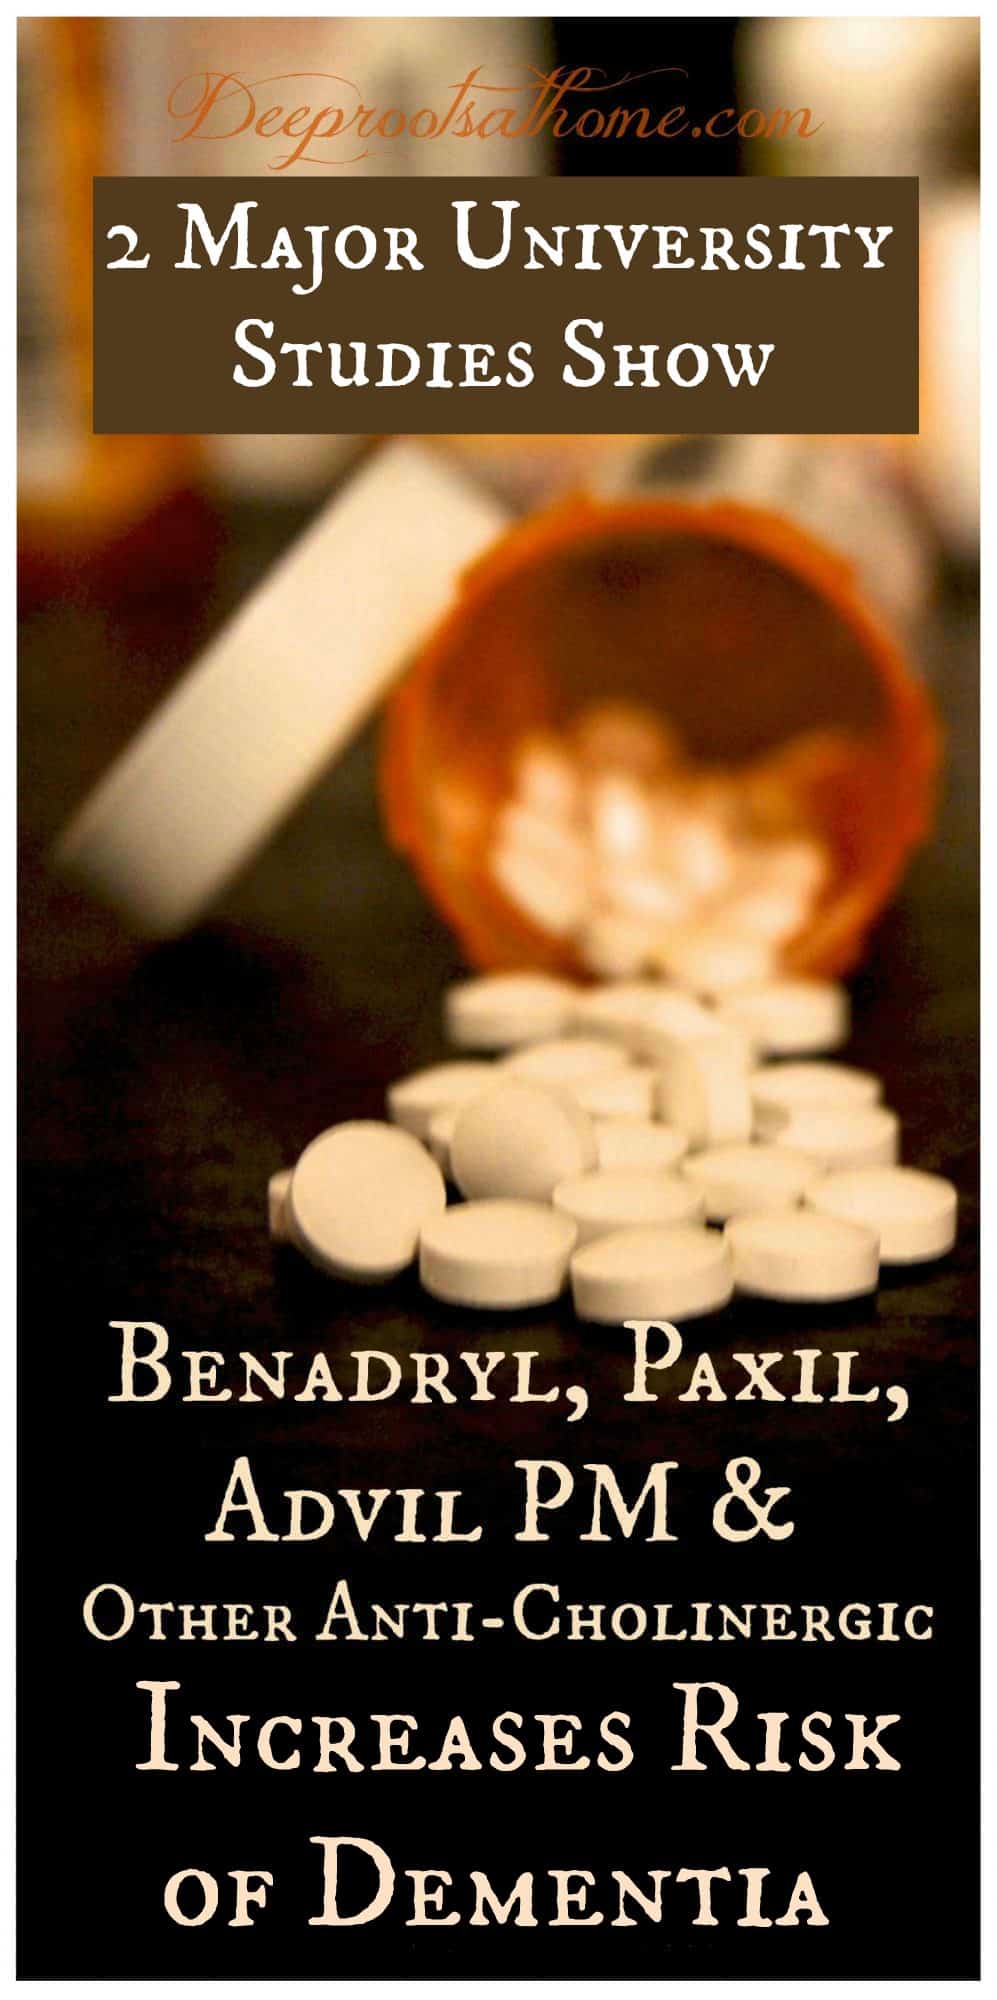 Benadryl, Paxil, Advil PM & Other OTC Drugs Linked to Dementia?